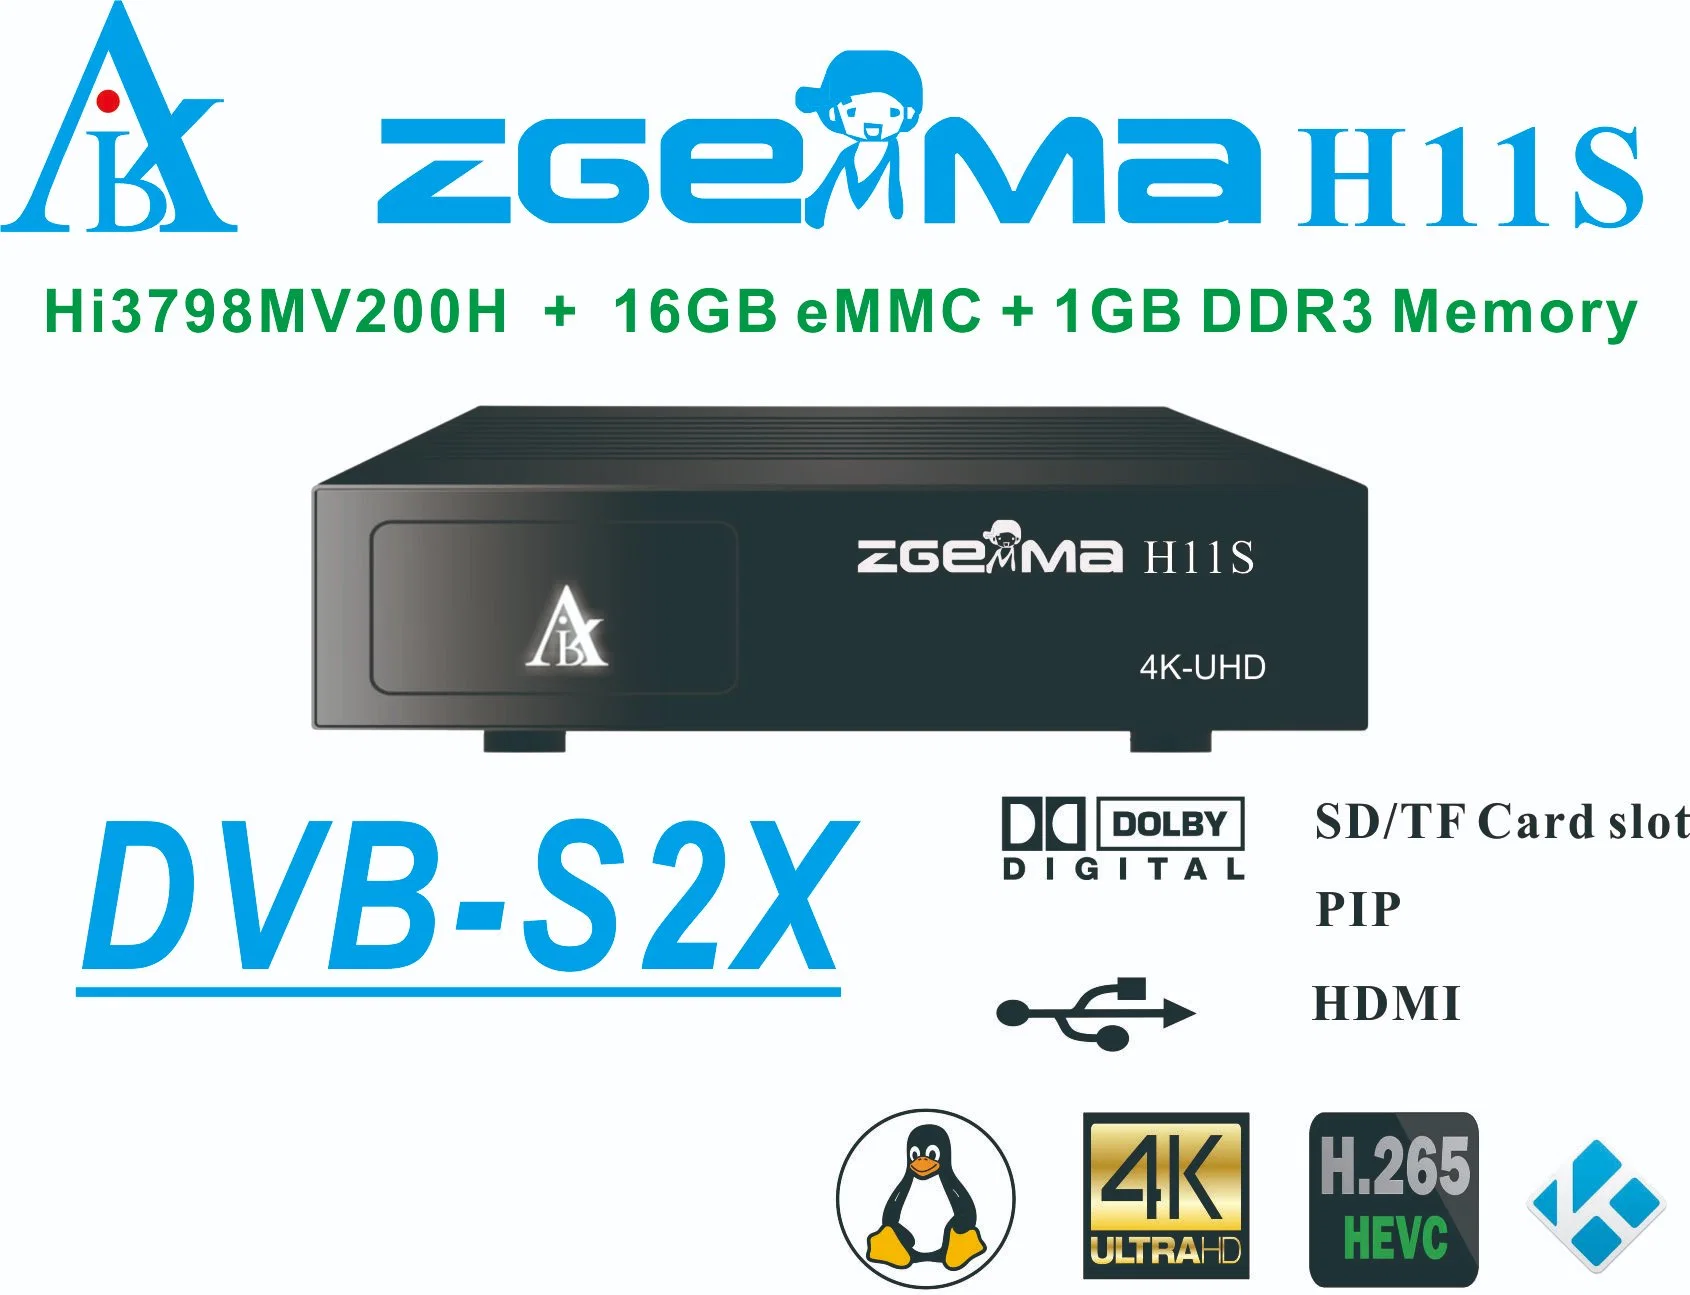 Zgemmah11s 4K- 2160p Linux Operating System Digital Satellite TV Receiver